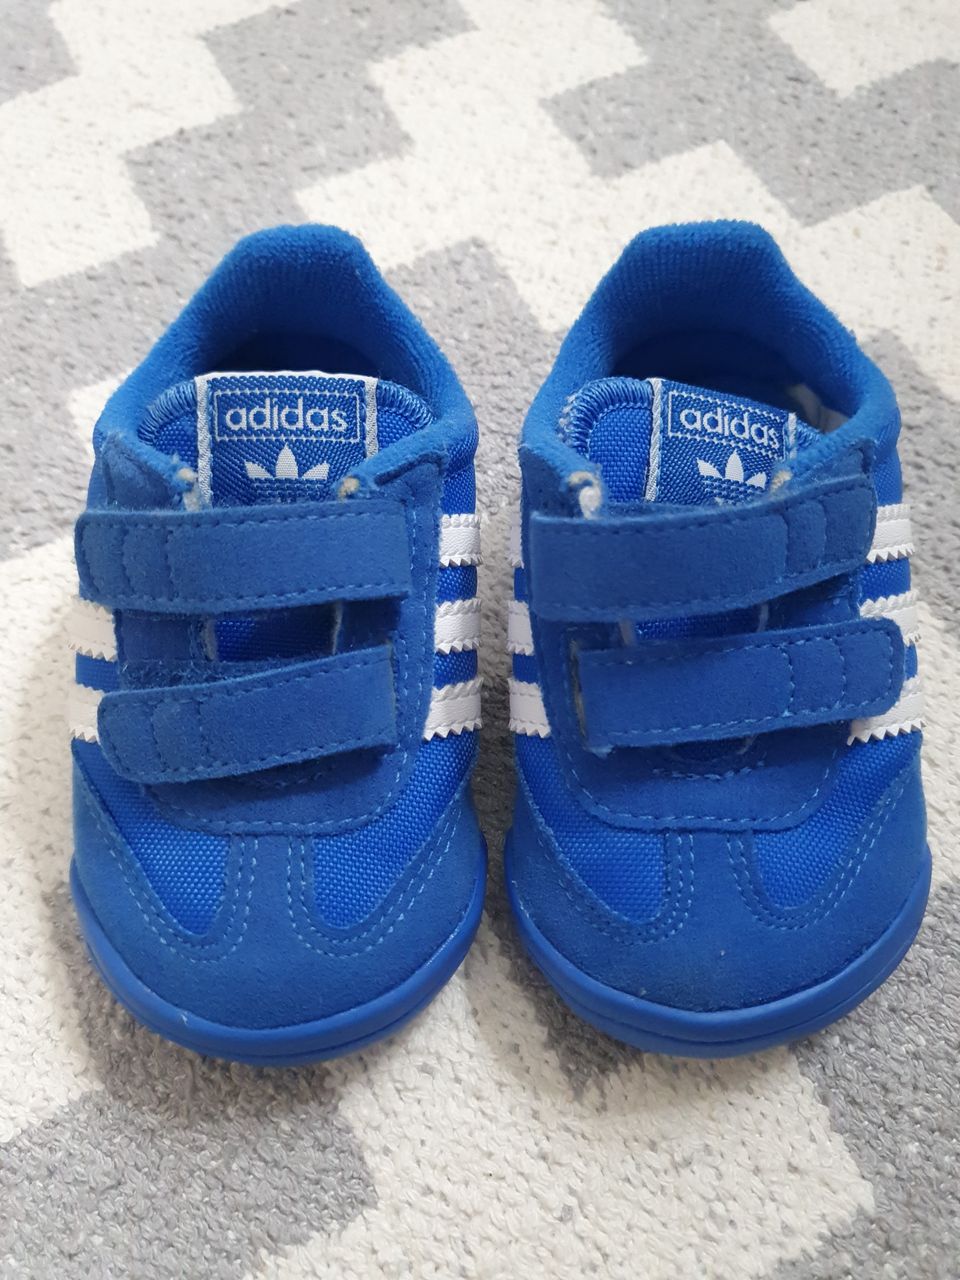 Adidas vauvan kengät, koko 18